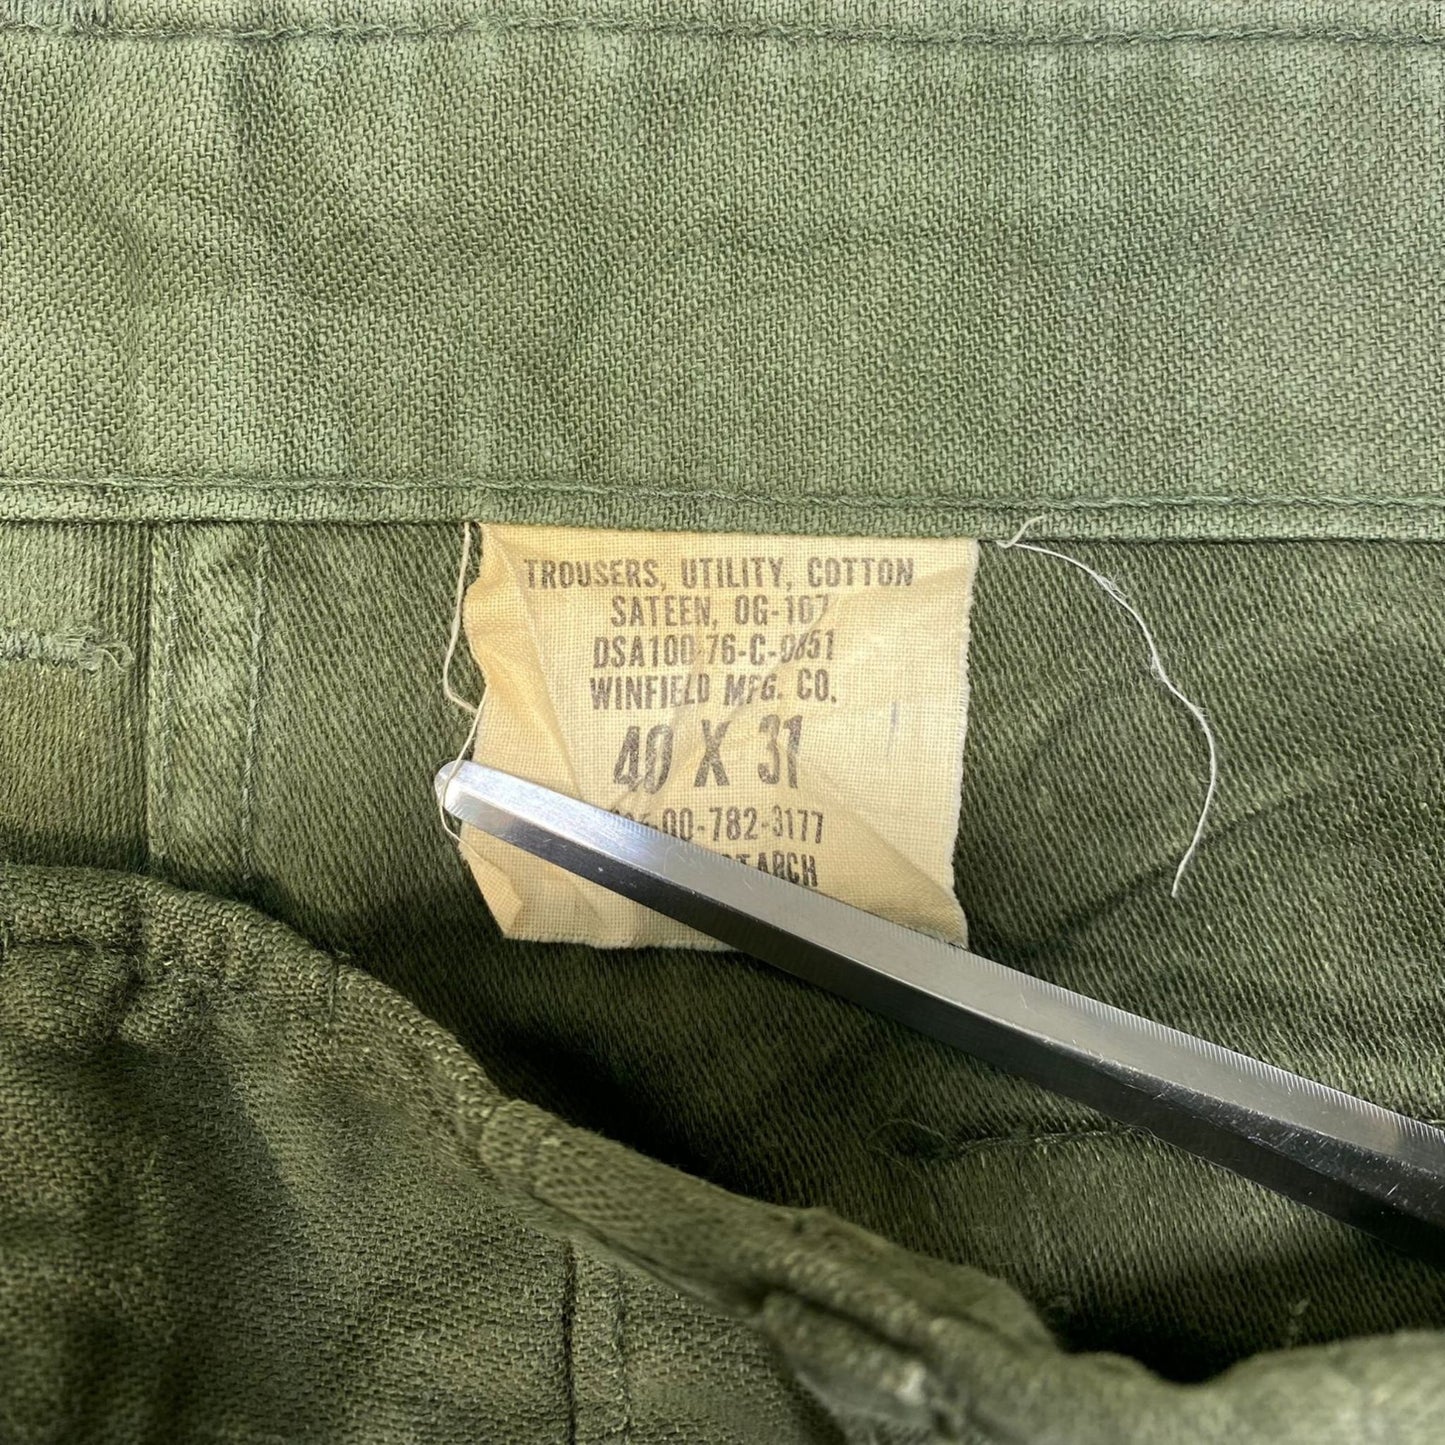 US OG-107 Fatique Utility Pants, Sateen, Baker pants - size 40 x 31